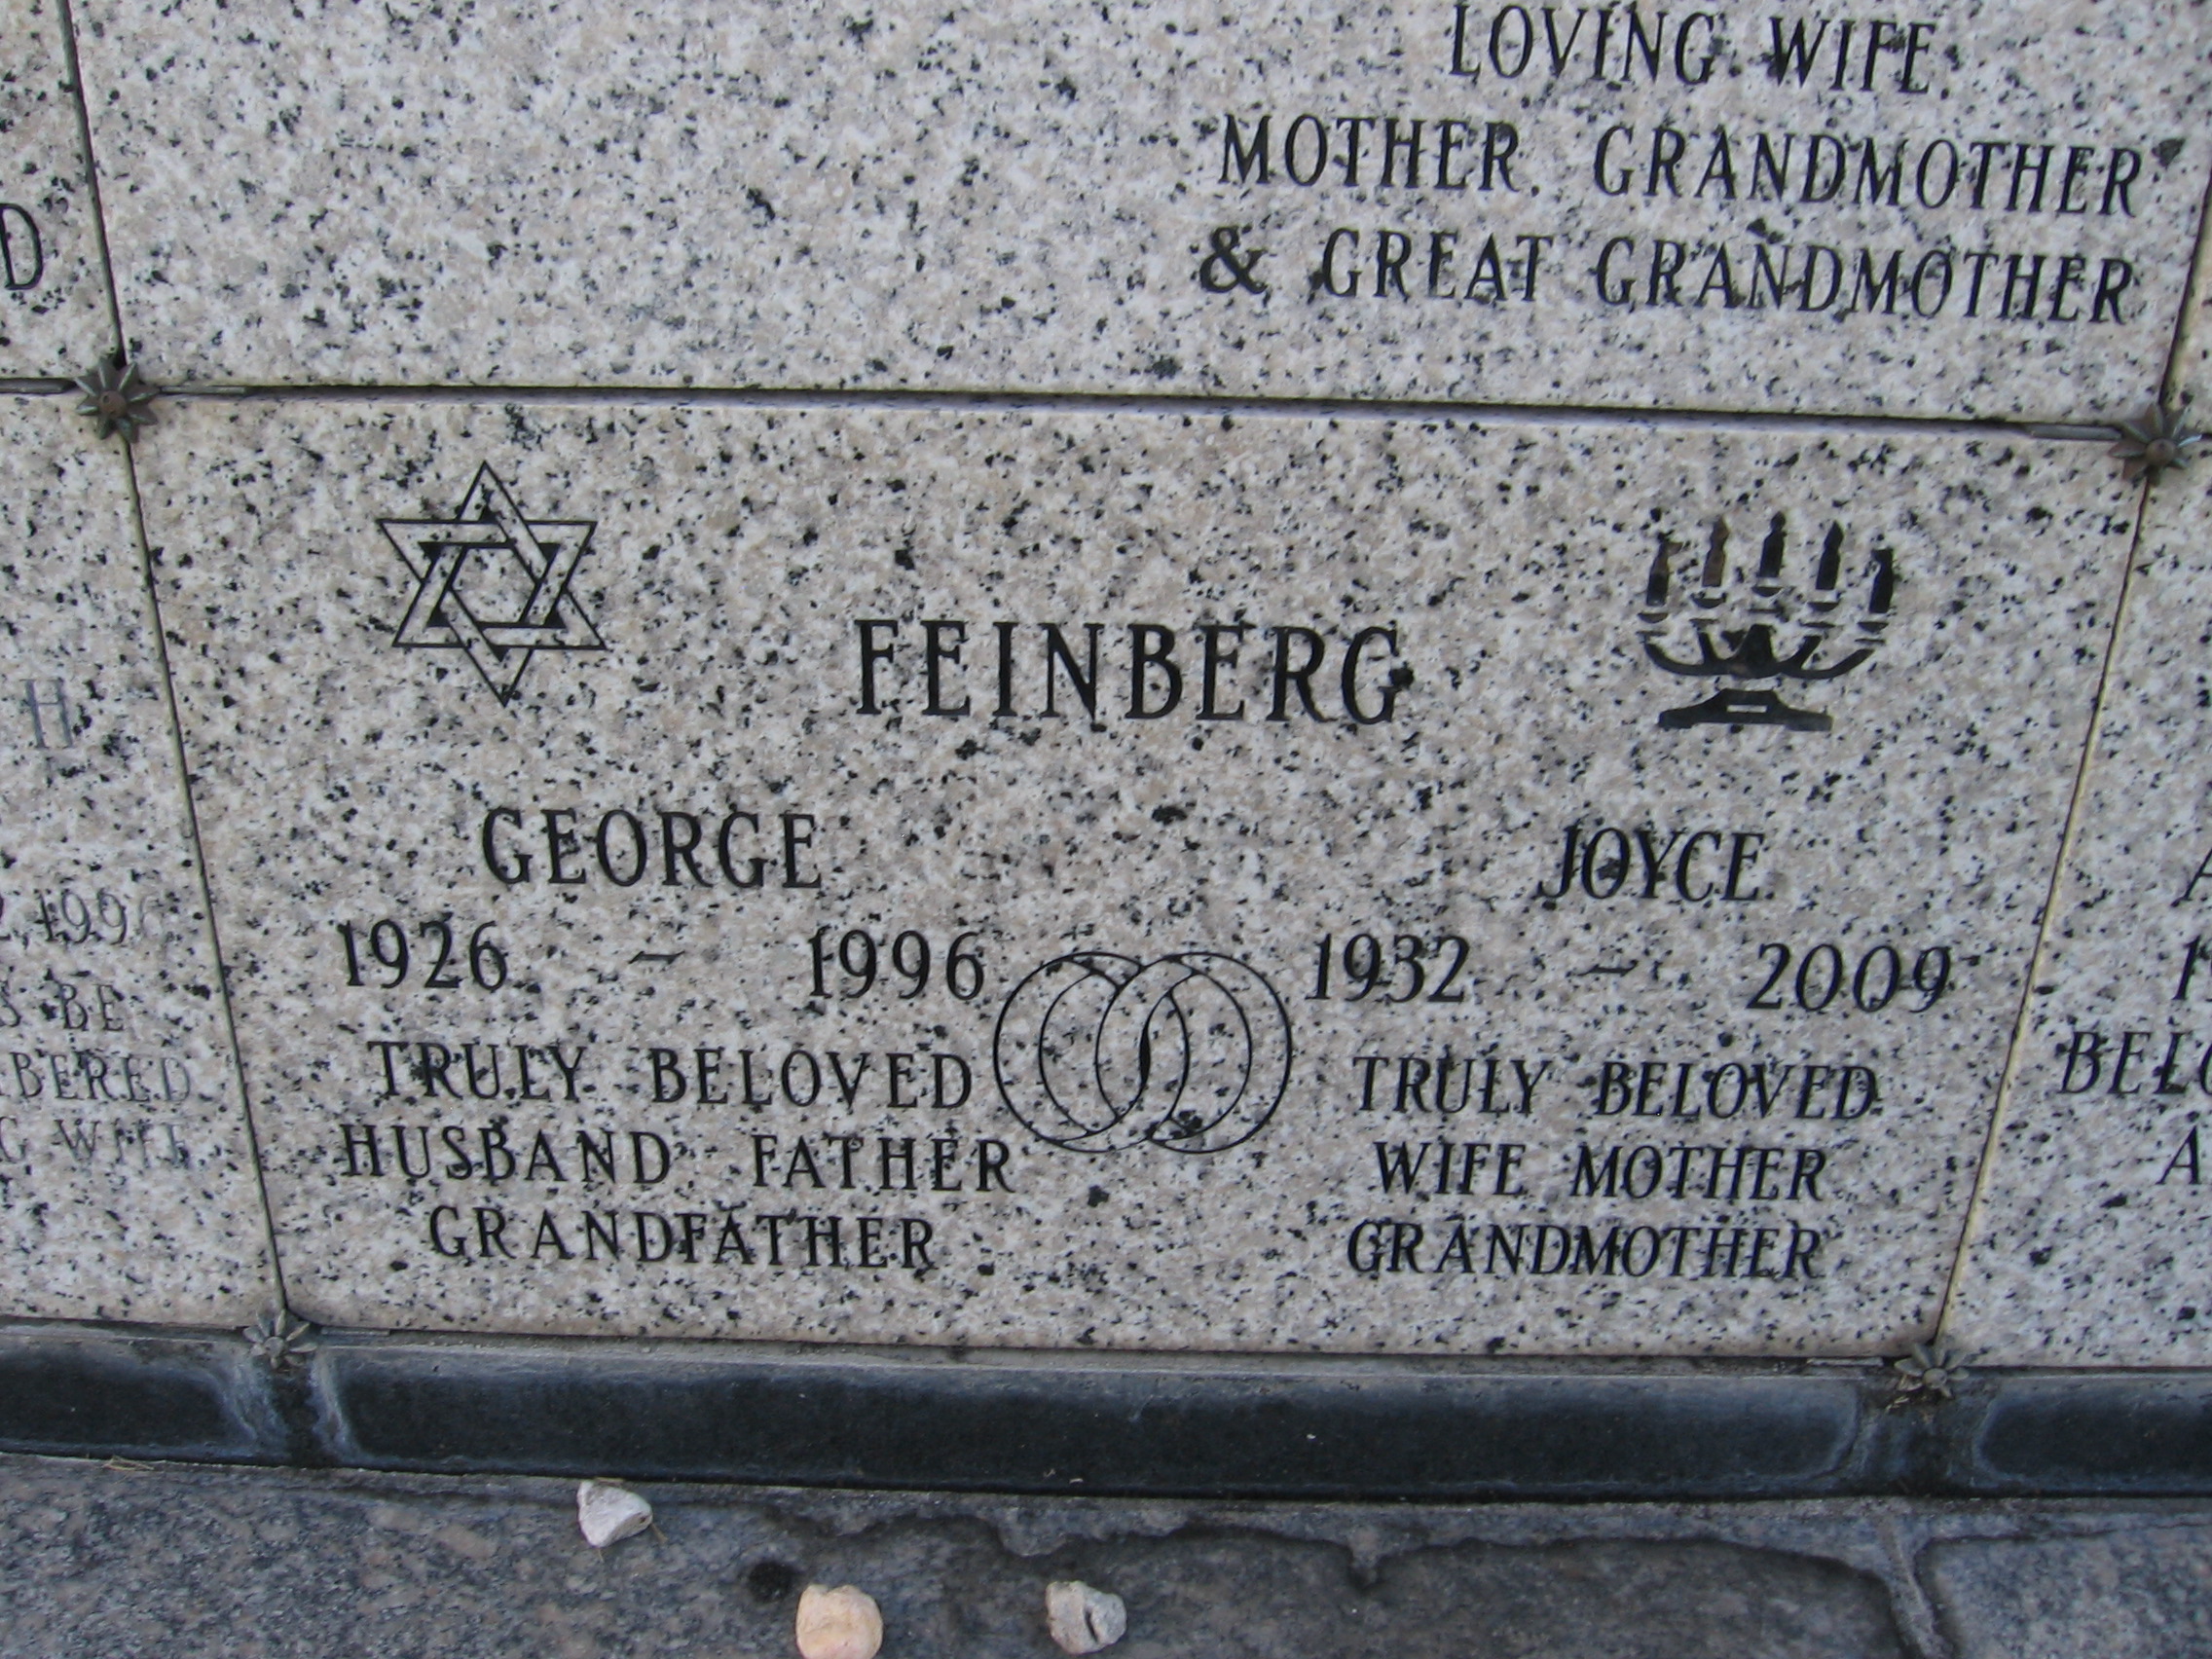 George Feinberg